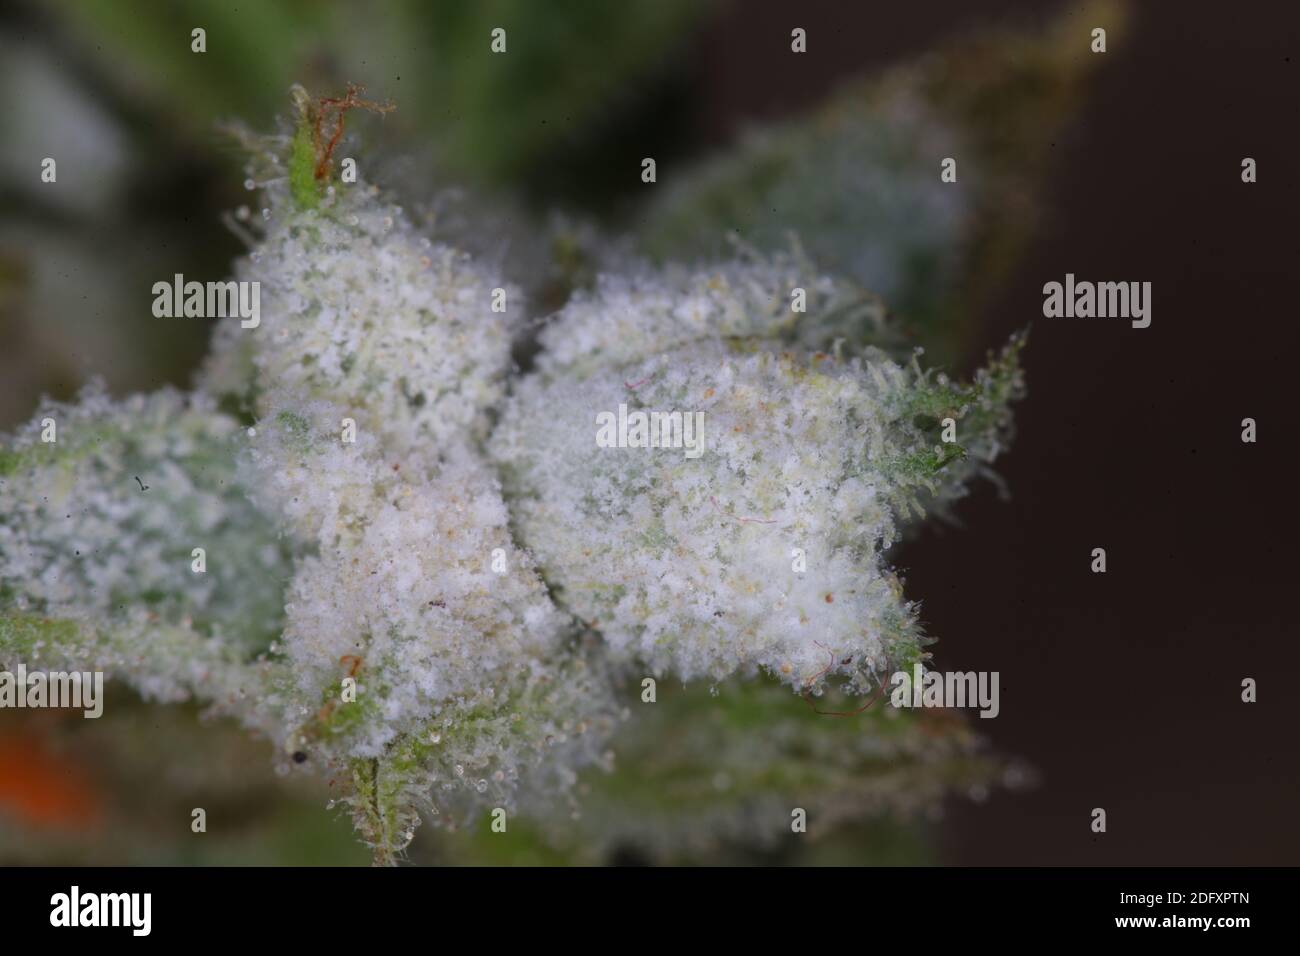 white mold on the hemp plant Stock Photo